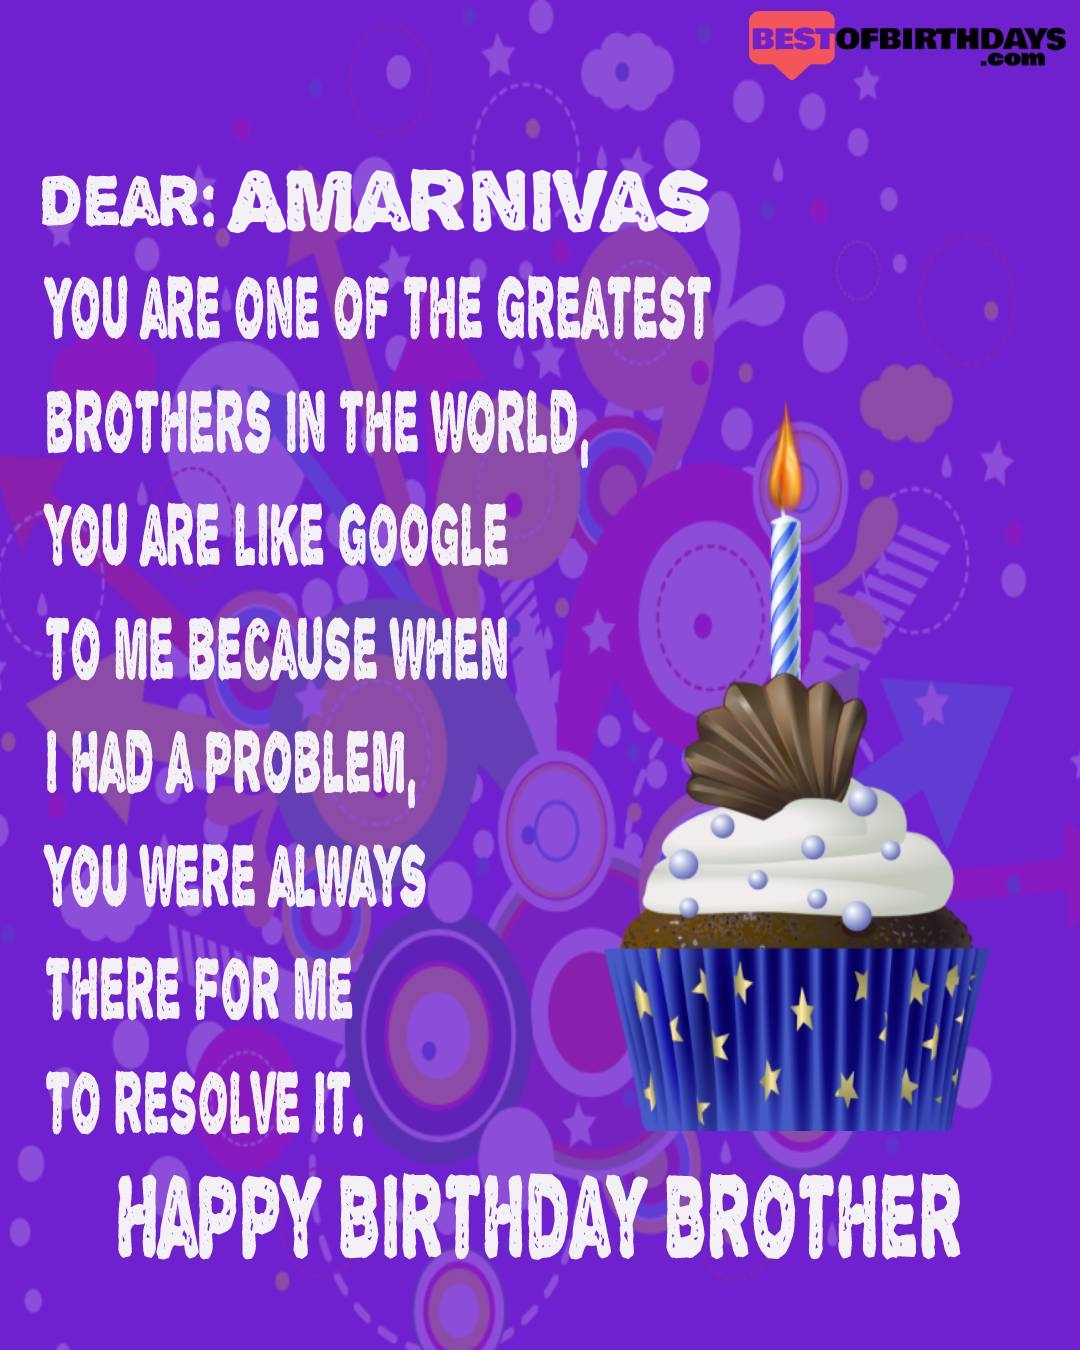 Happy birthday amarnivas bhai brother bro